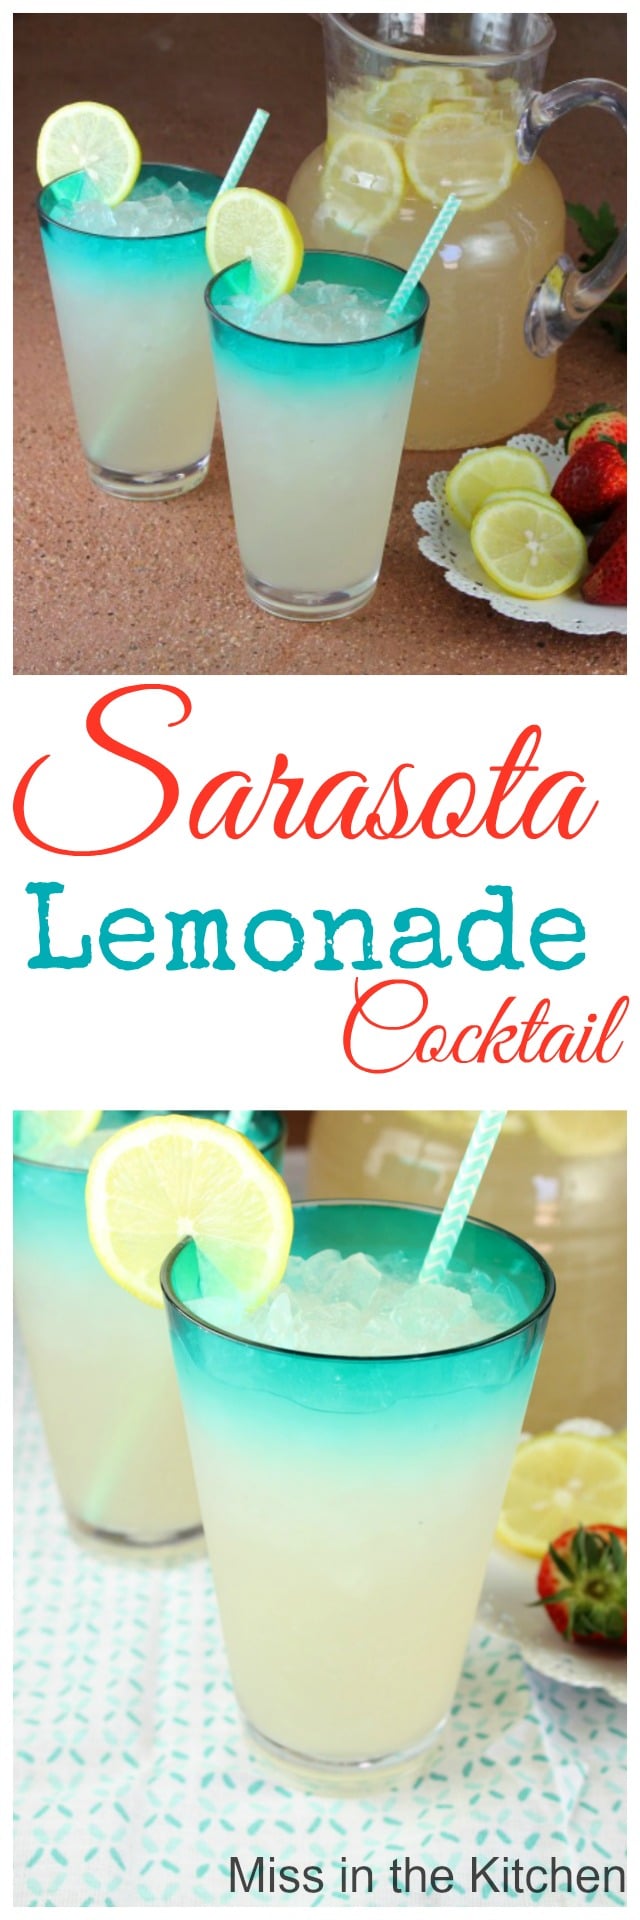 Sarasota Lemonade Cocktail Recipe from MissintheKitchen.com